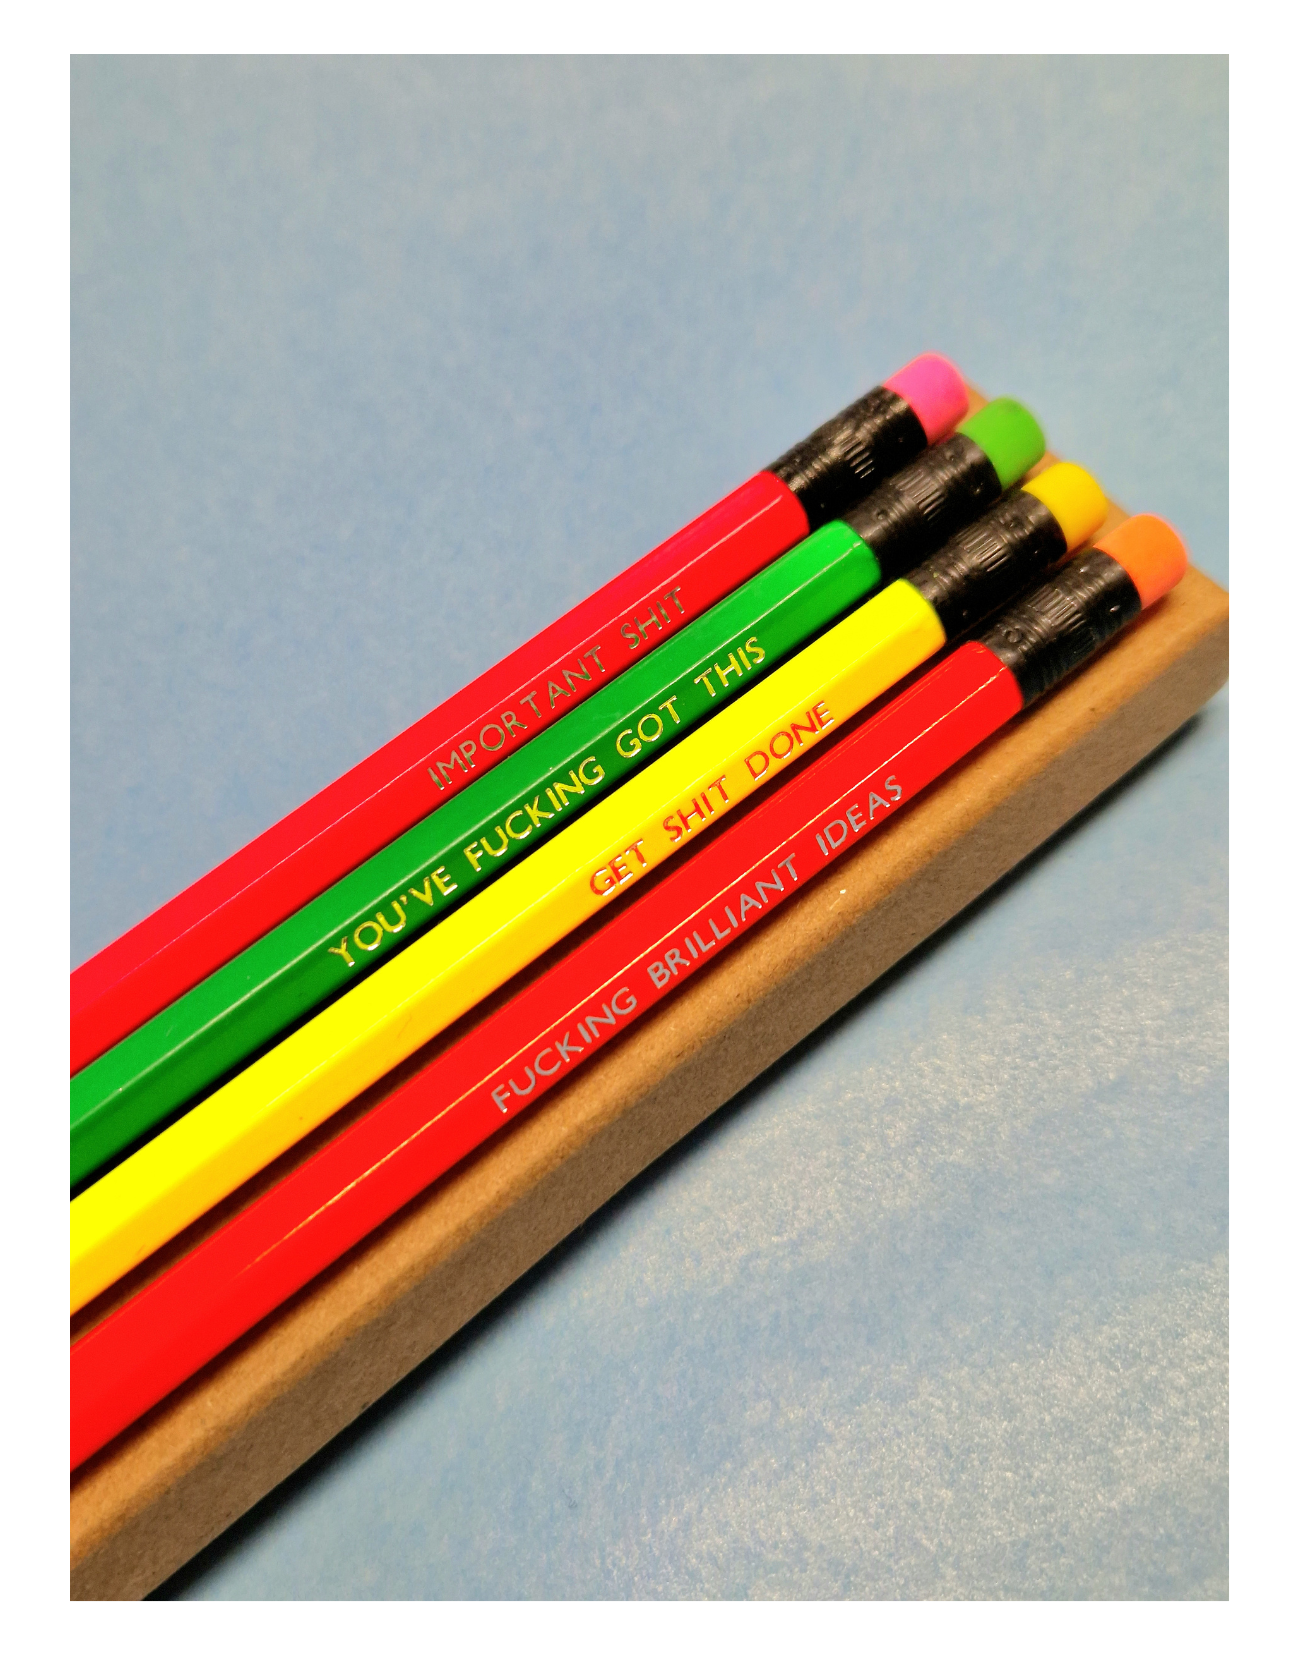 Single Fun Pencils - Options Available